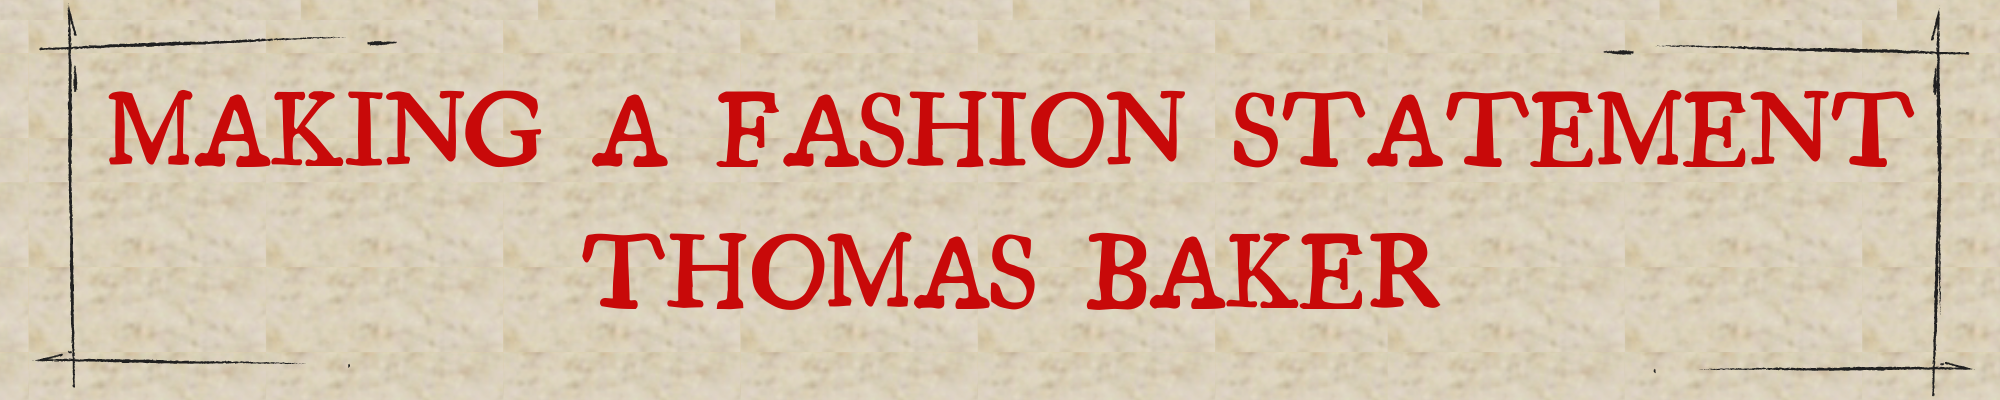 Making A Fashion Statement: Thomas Baker.